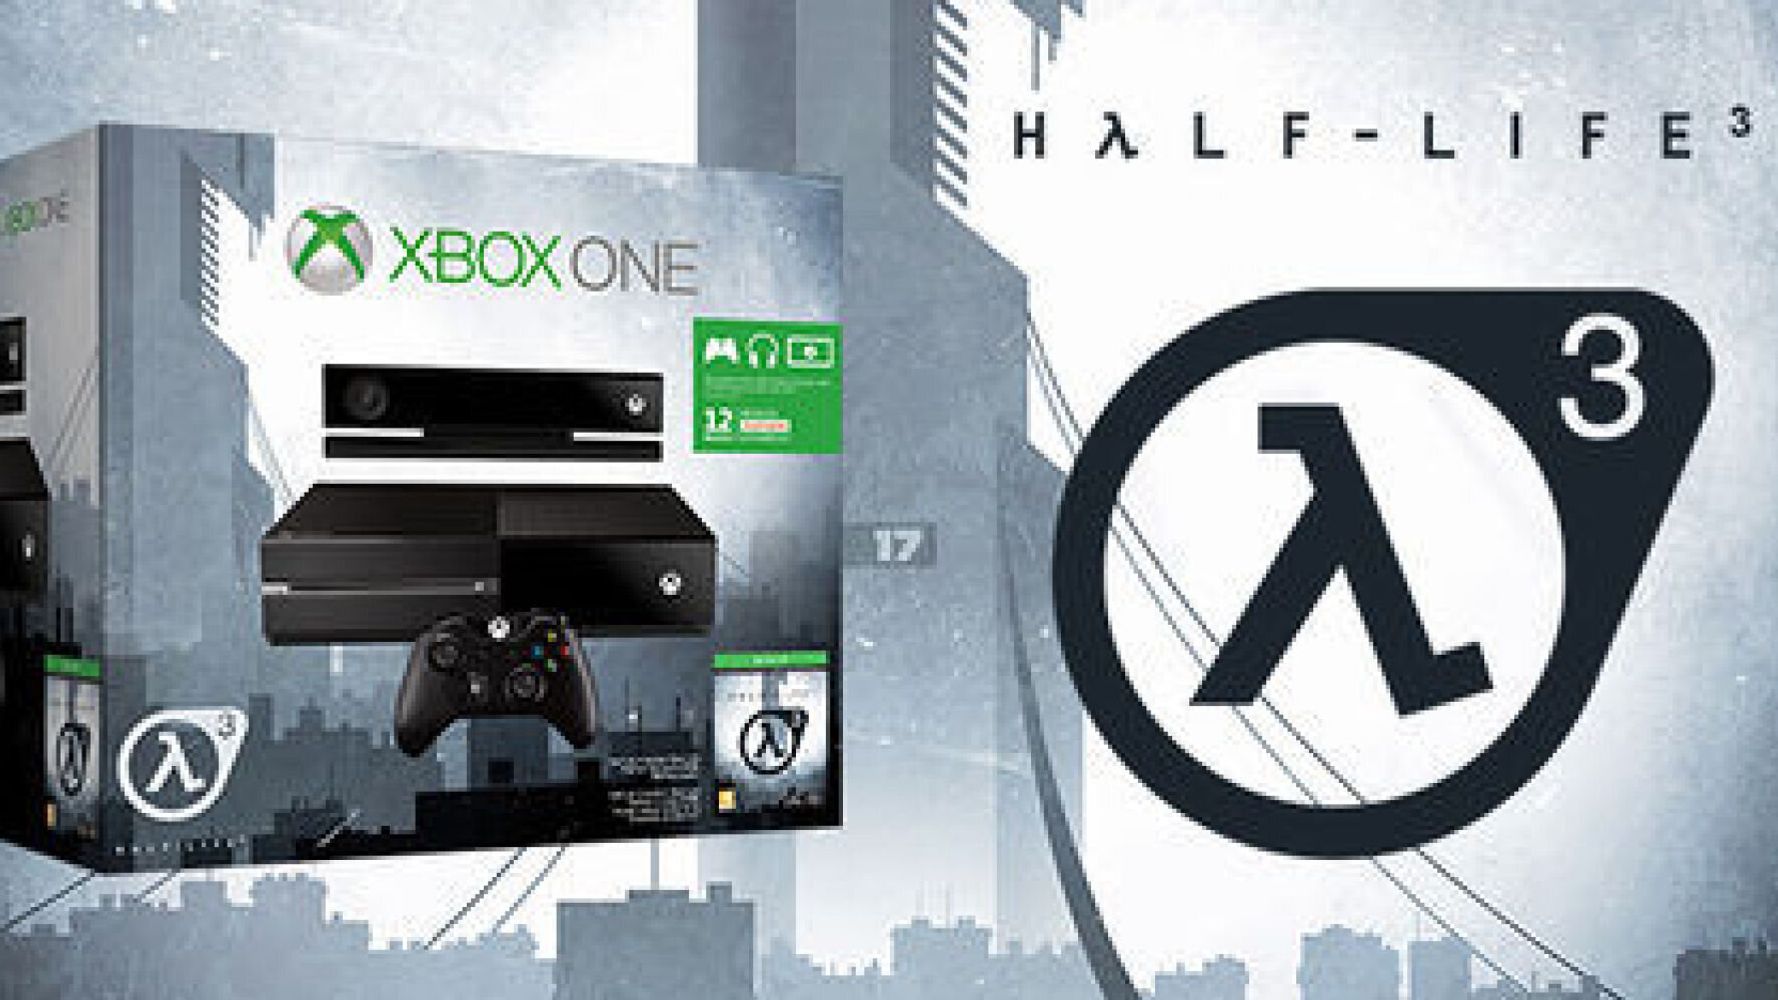 Half life xbox. Хбокс лайф. Half Life Xbox 360. Hl3.